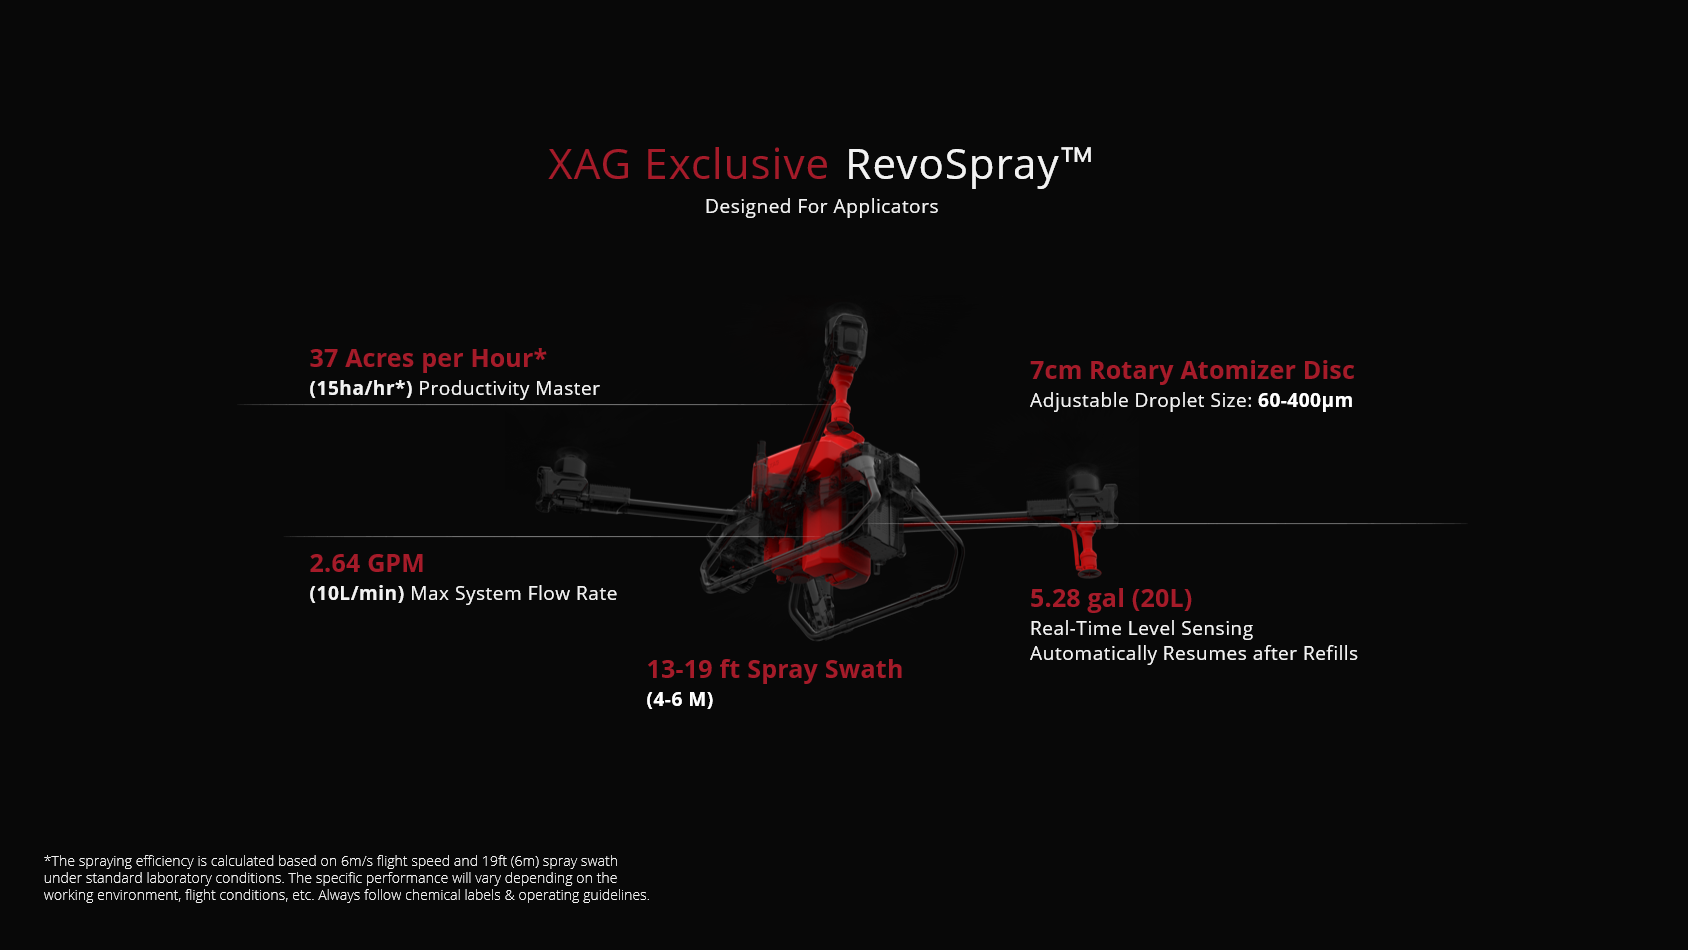 XAG P40 20L Agriculture Drone, XAG Exclusive RevoSpray TM Designed For Applicators 37 Ac